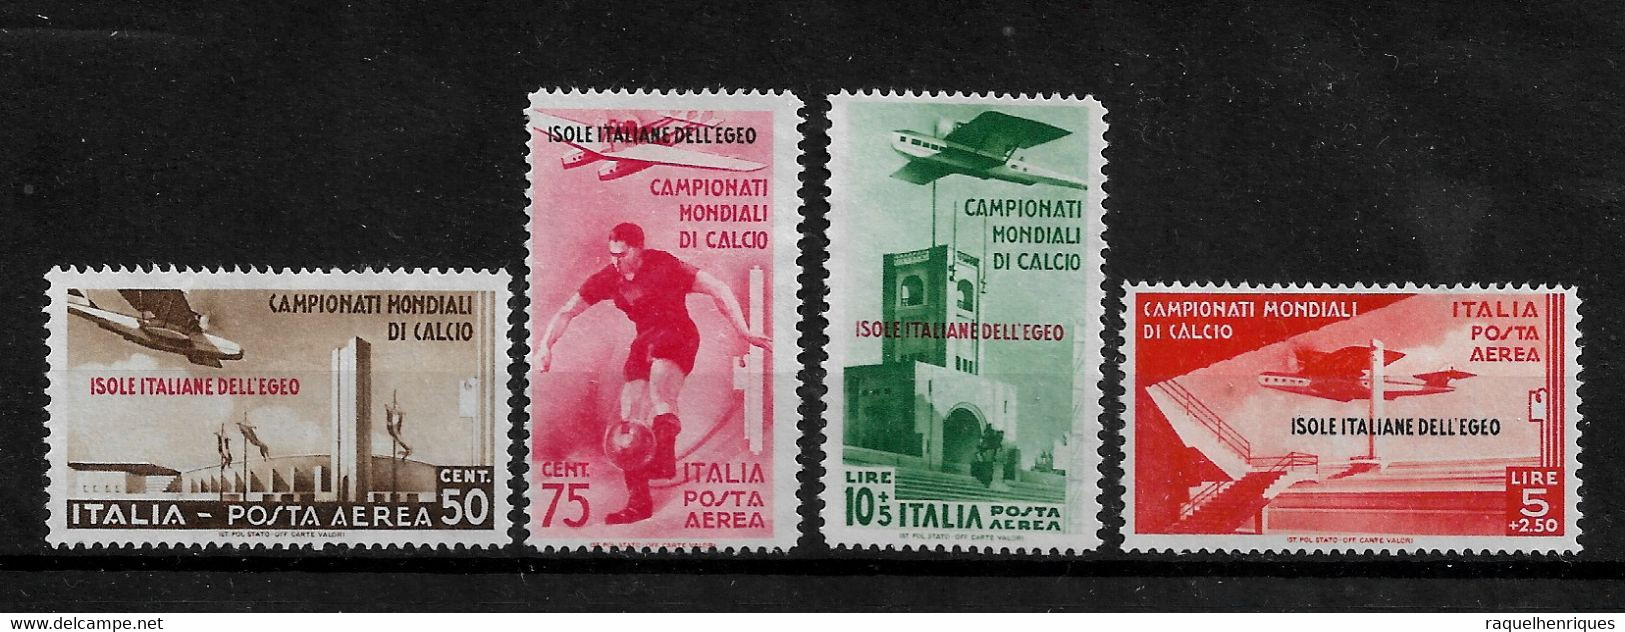 ITALY STAMP - AEGEAN ISLANDS - 1934 Airmail - Football World Cup SET M NG (BA5#108) - Egée (Admin. Autonome)